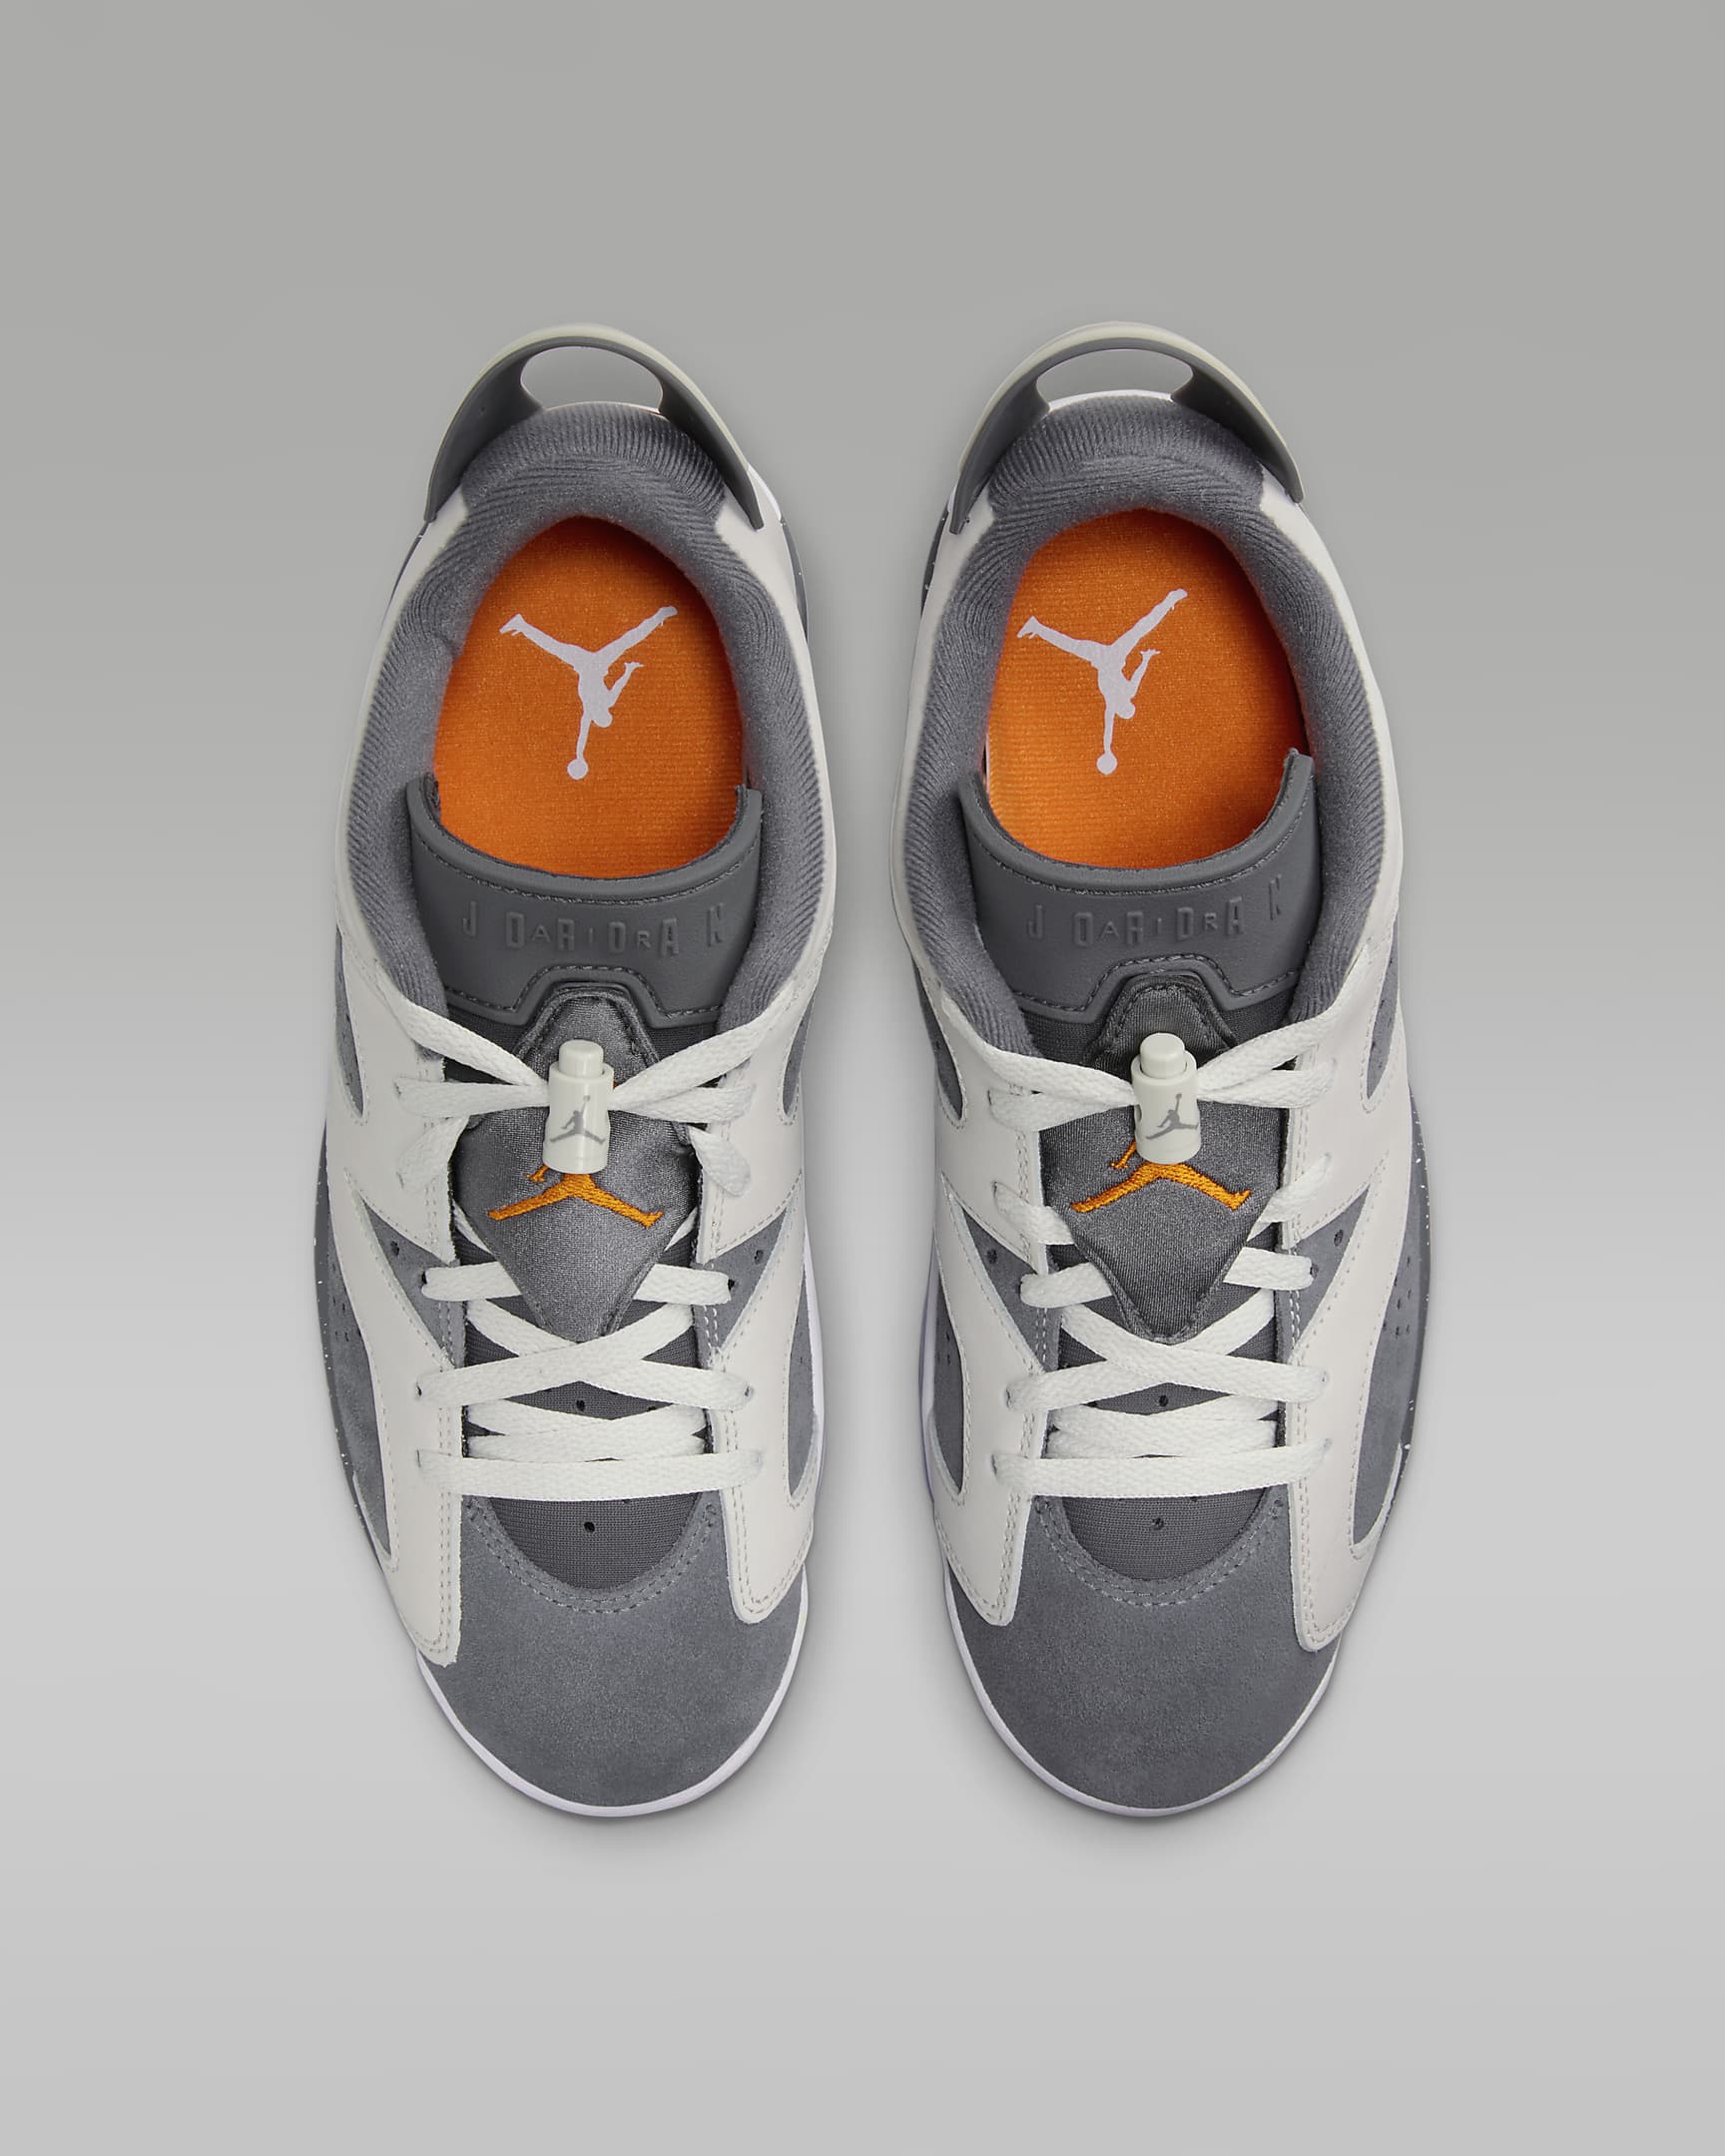 Insane Sneaker Alert! Air Jordan 6 Retro Low x PSG Men’s Shoes Review You Can’t Miss!